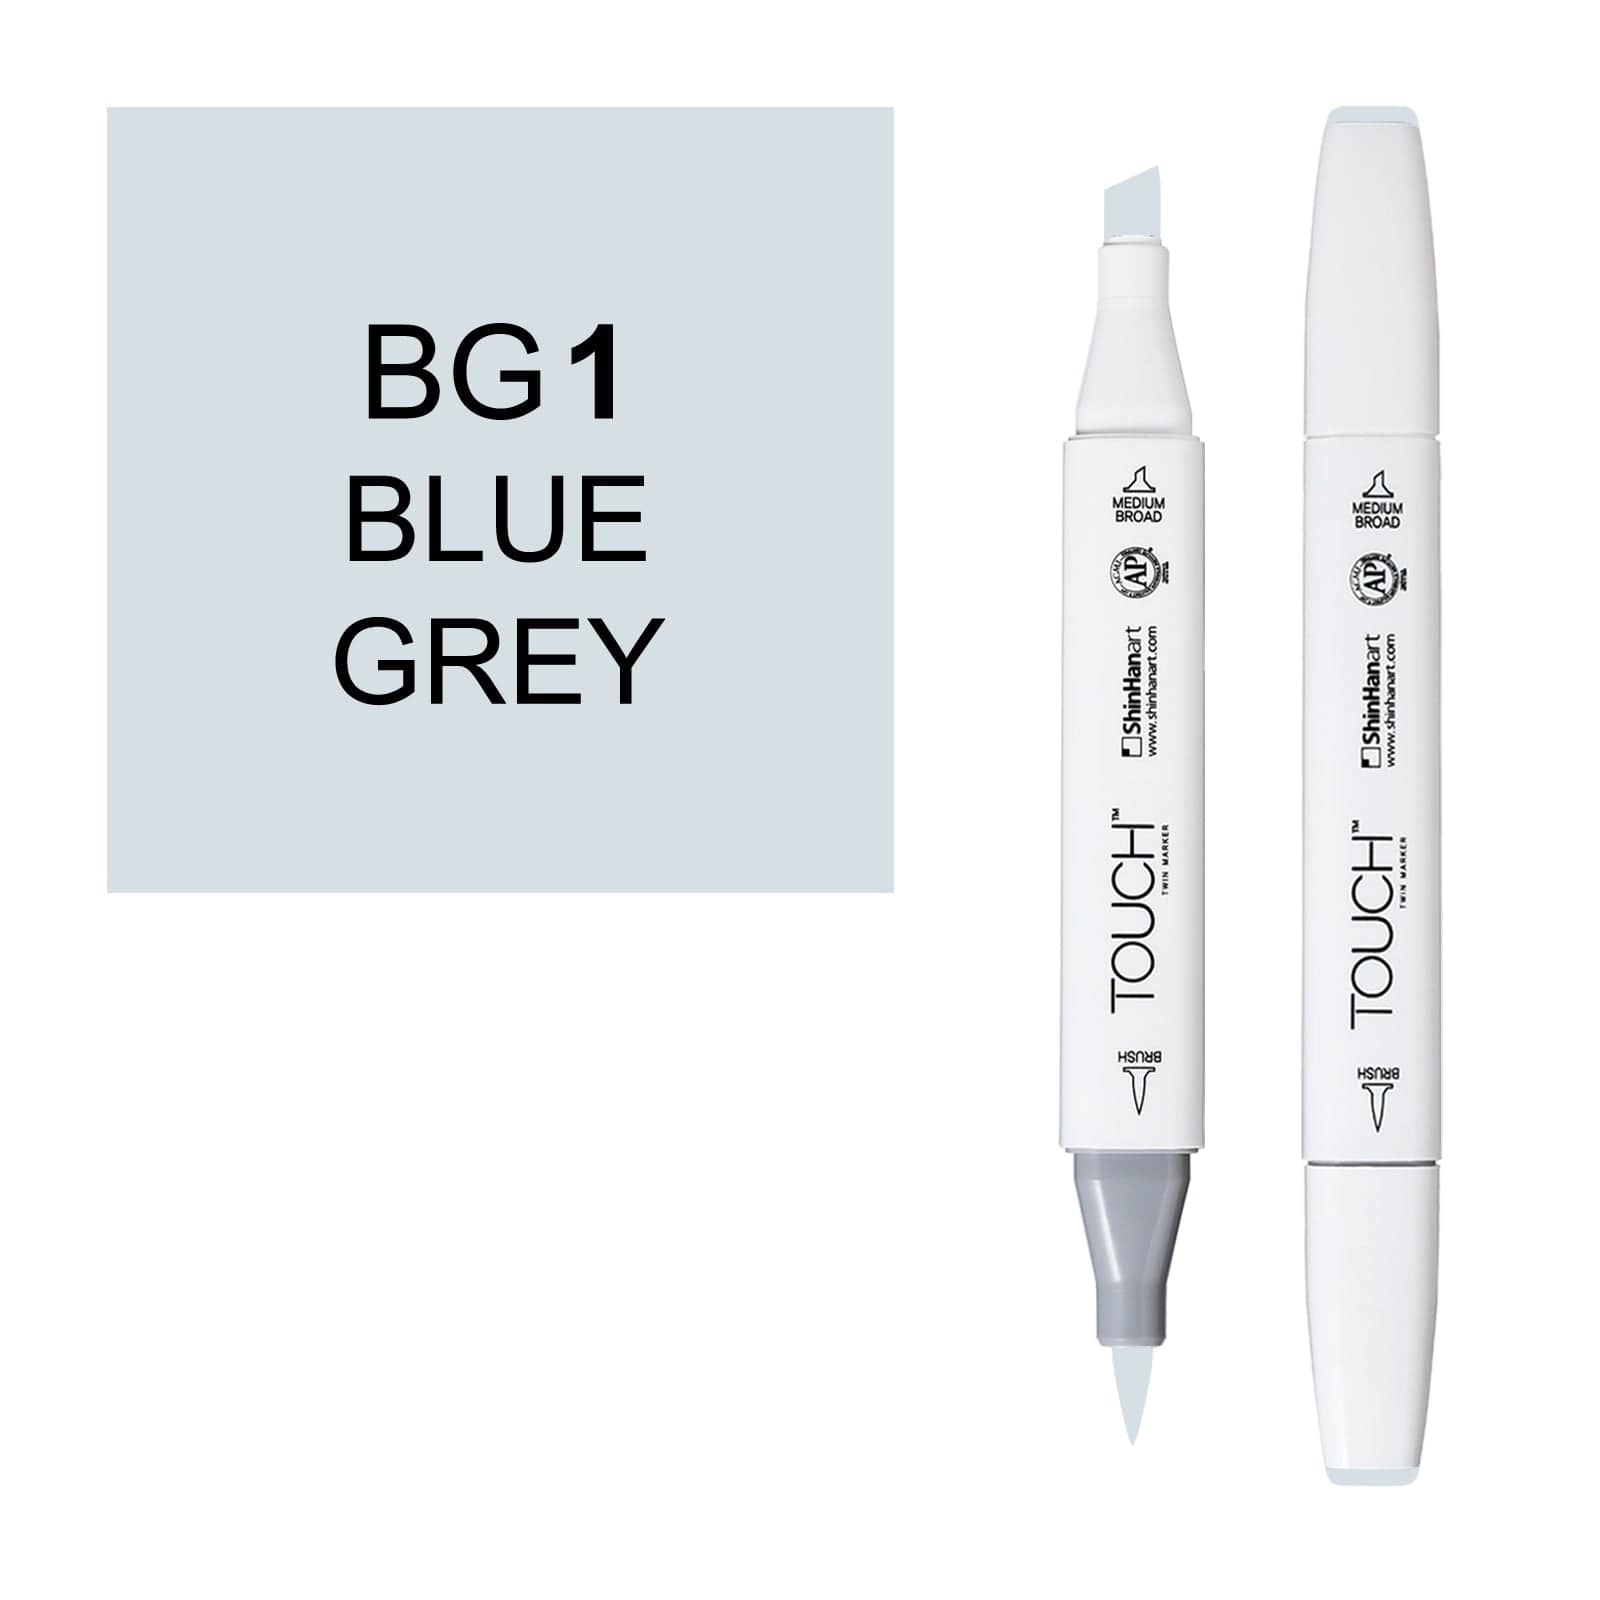 ShinHanart Touch Twin Brush Markers 1 blue grey